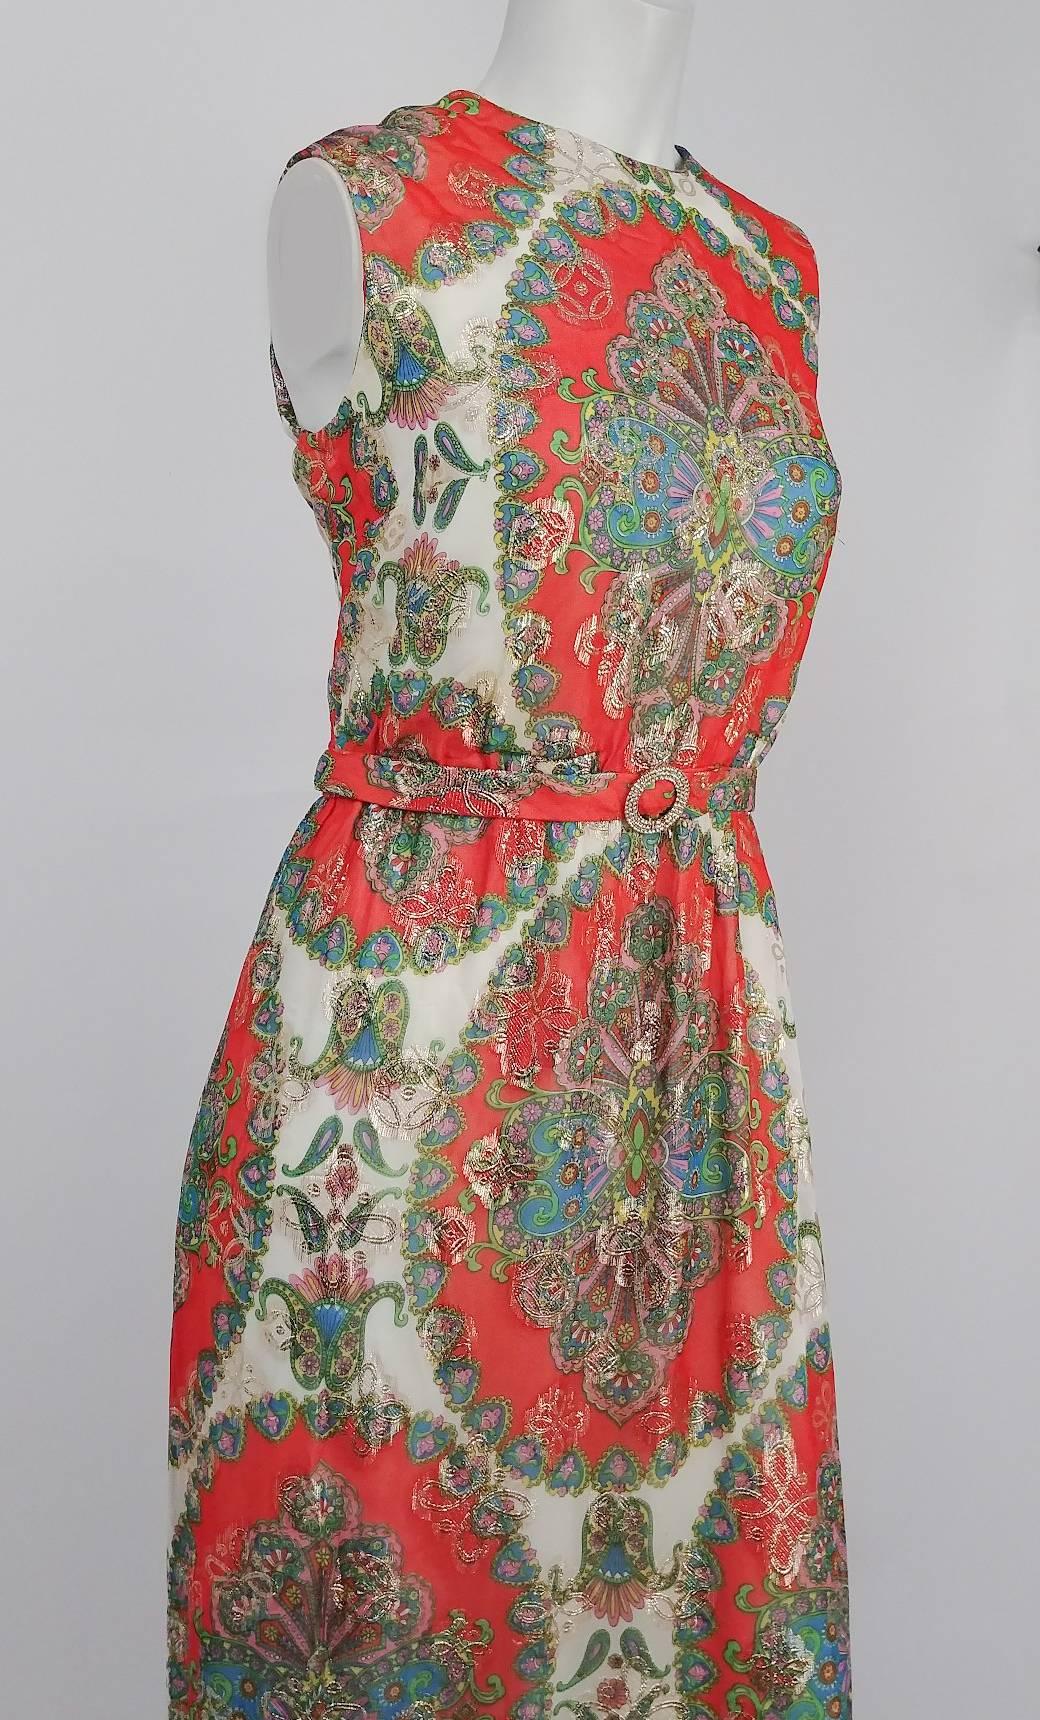 60s Printed Chiffon Dress w/ Metallic Threads & Matching Scarf. Chiffon column dress. Faux belt w/ rhinestone buckle. Matching scarf included. Zips up back. 